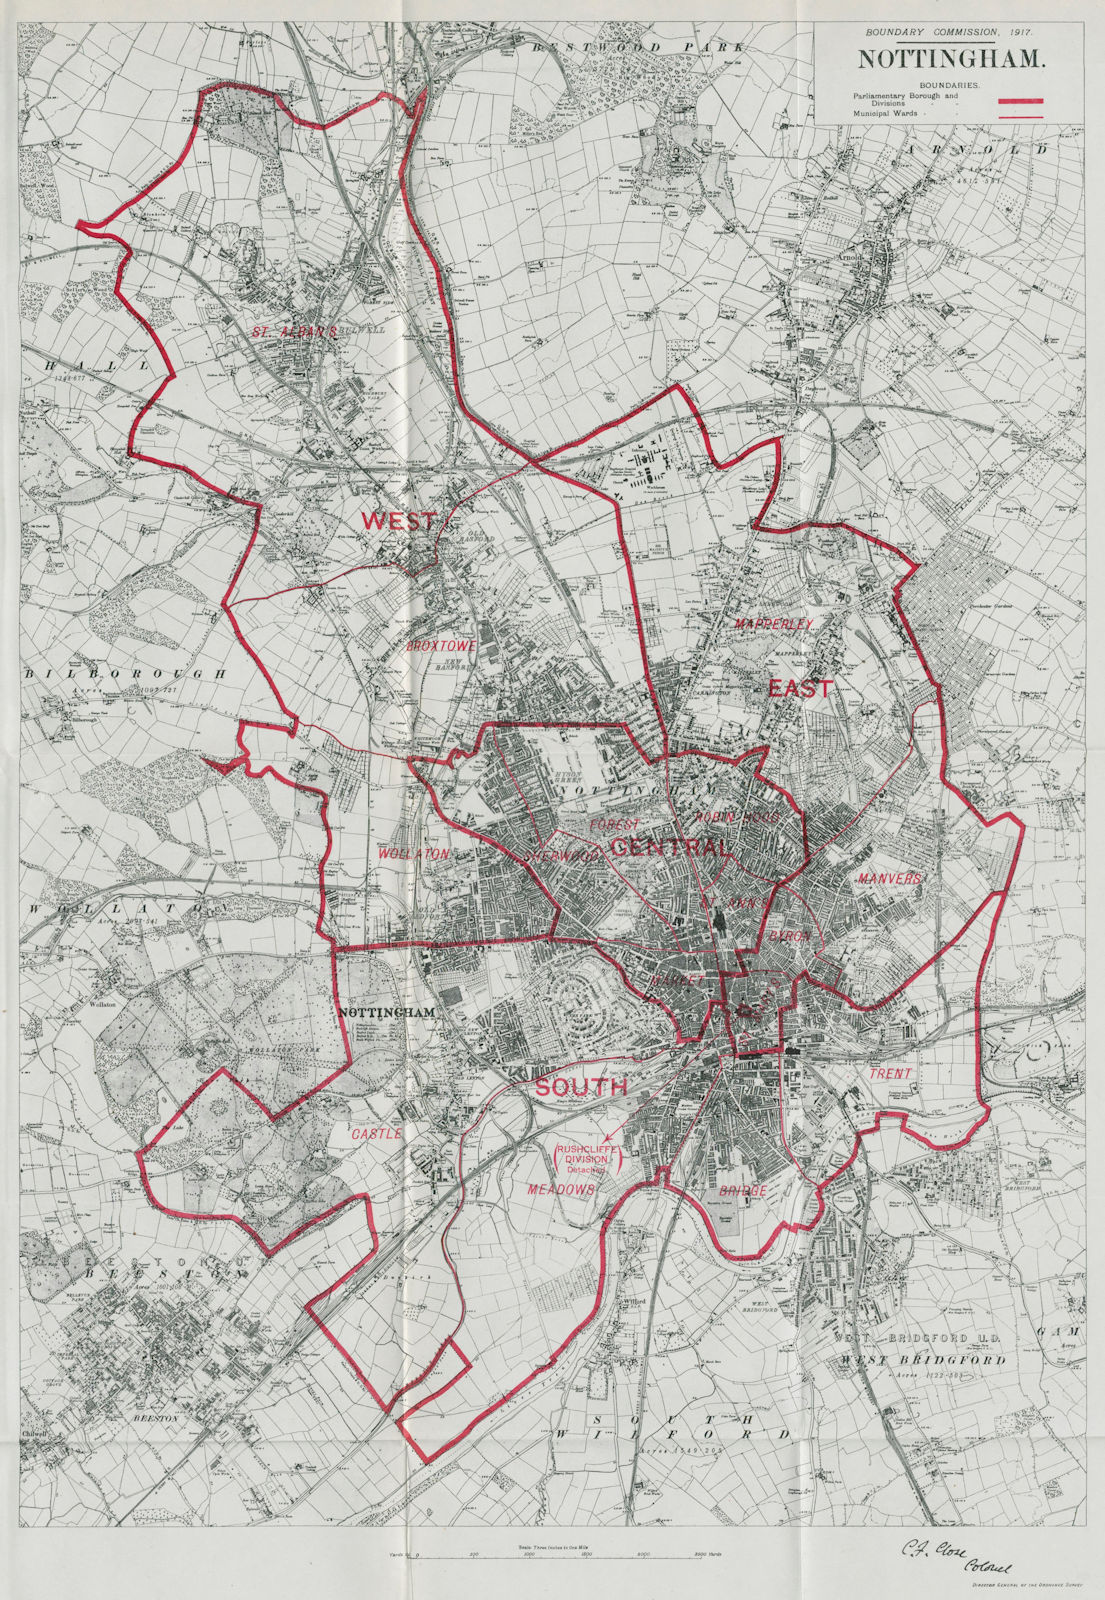 Nottingham Parliamentary Borough. Broxtowe Manvers BOUNDARY COMMISSION 1917 map